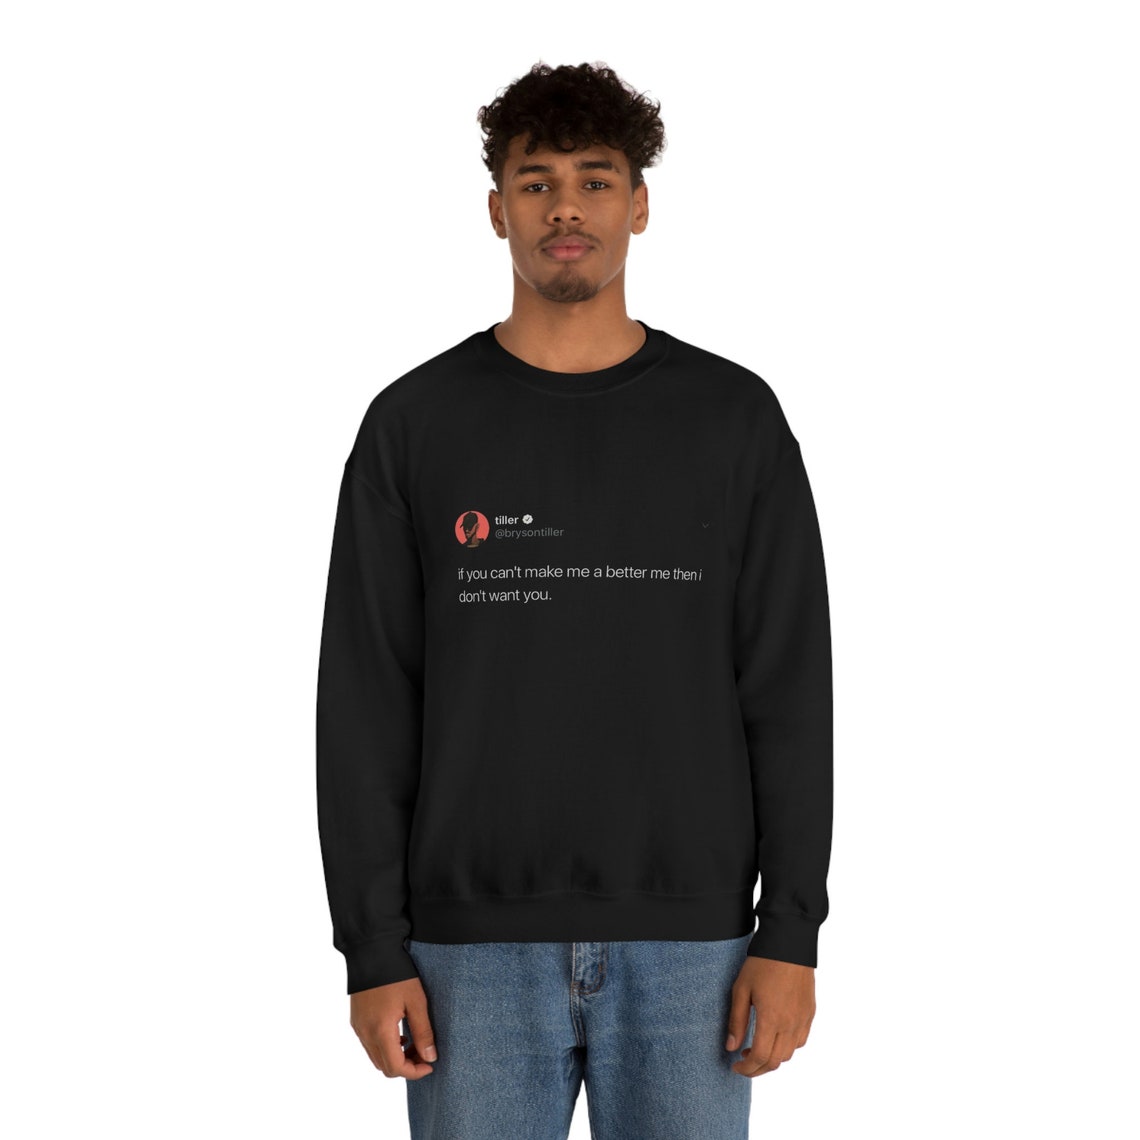 Unisex Sweatshirt With Iconic Bryson Tiller Twitter Tweet - Etsy